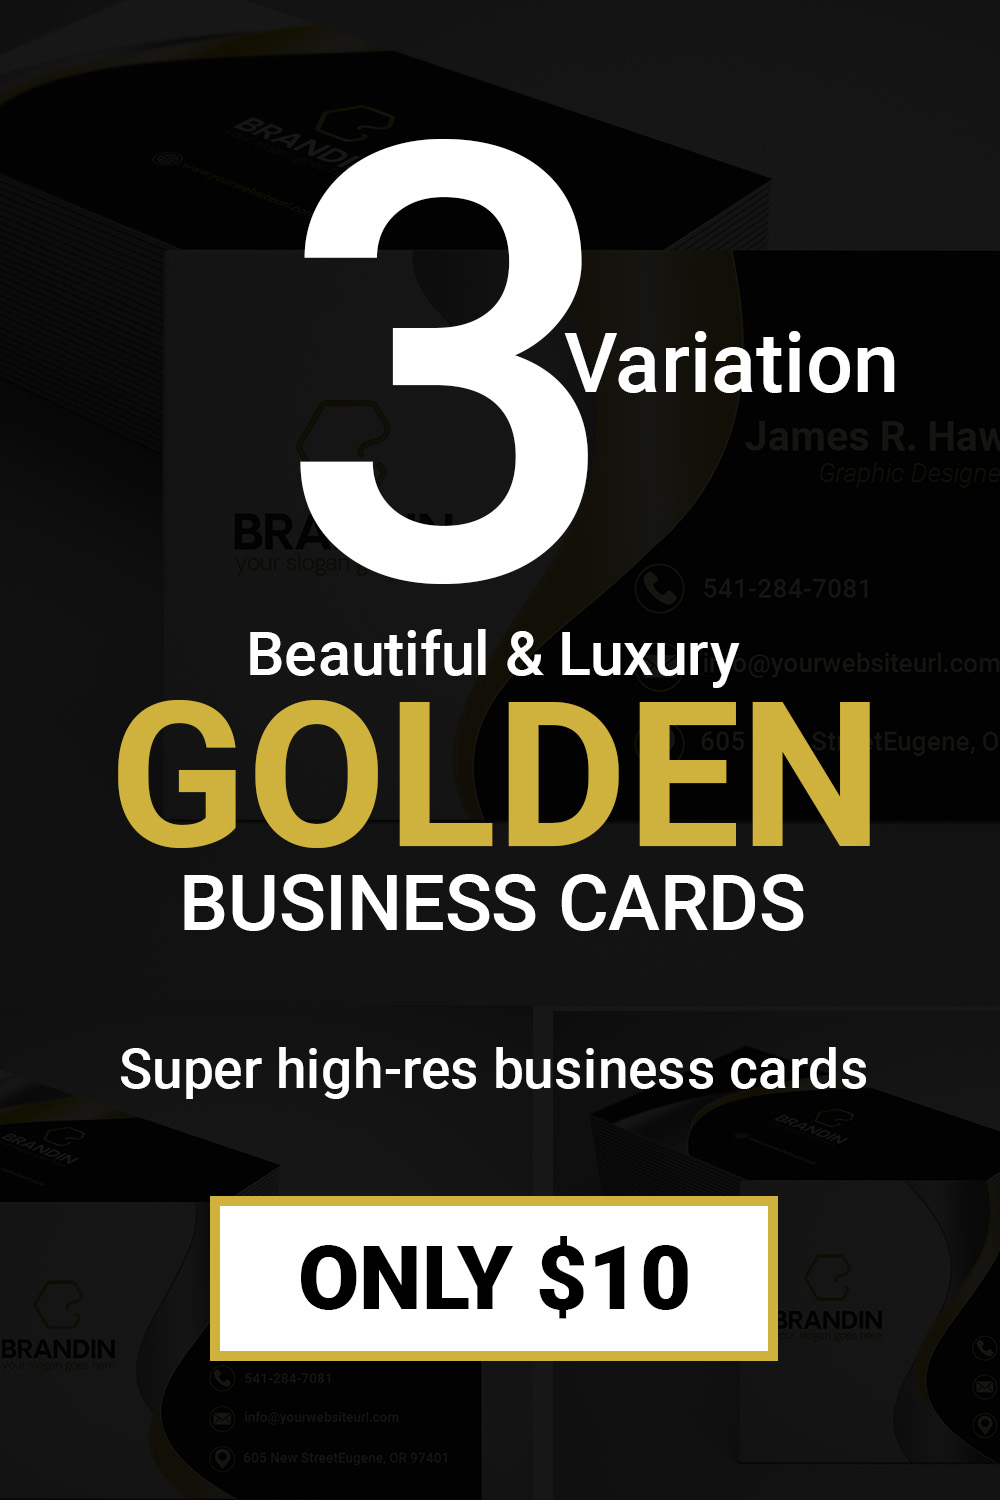 3 in 1 modern & Luxury golden business card bundles pinterest preview image.